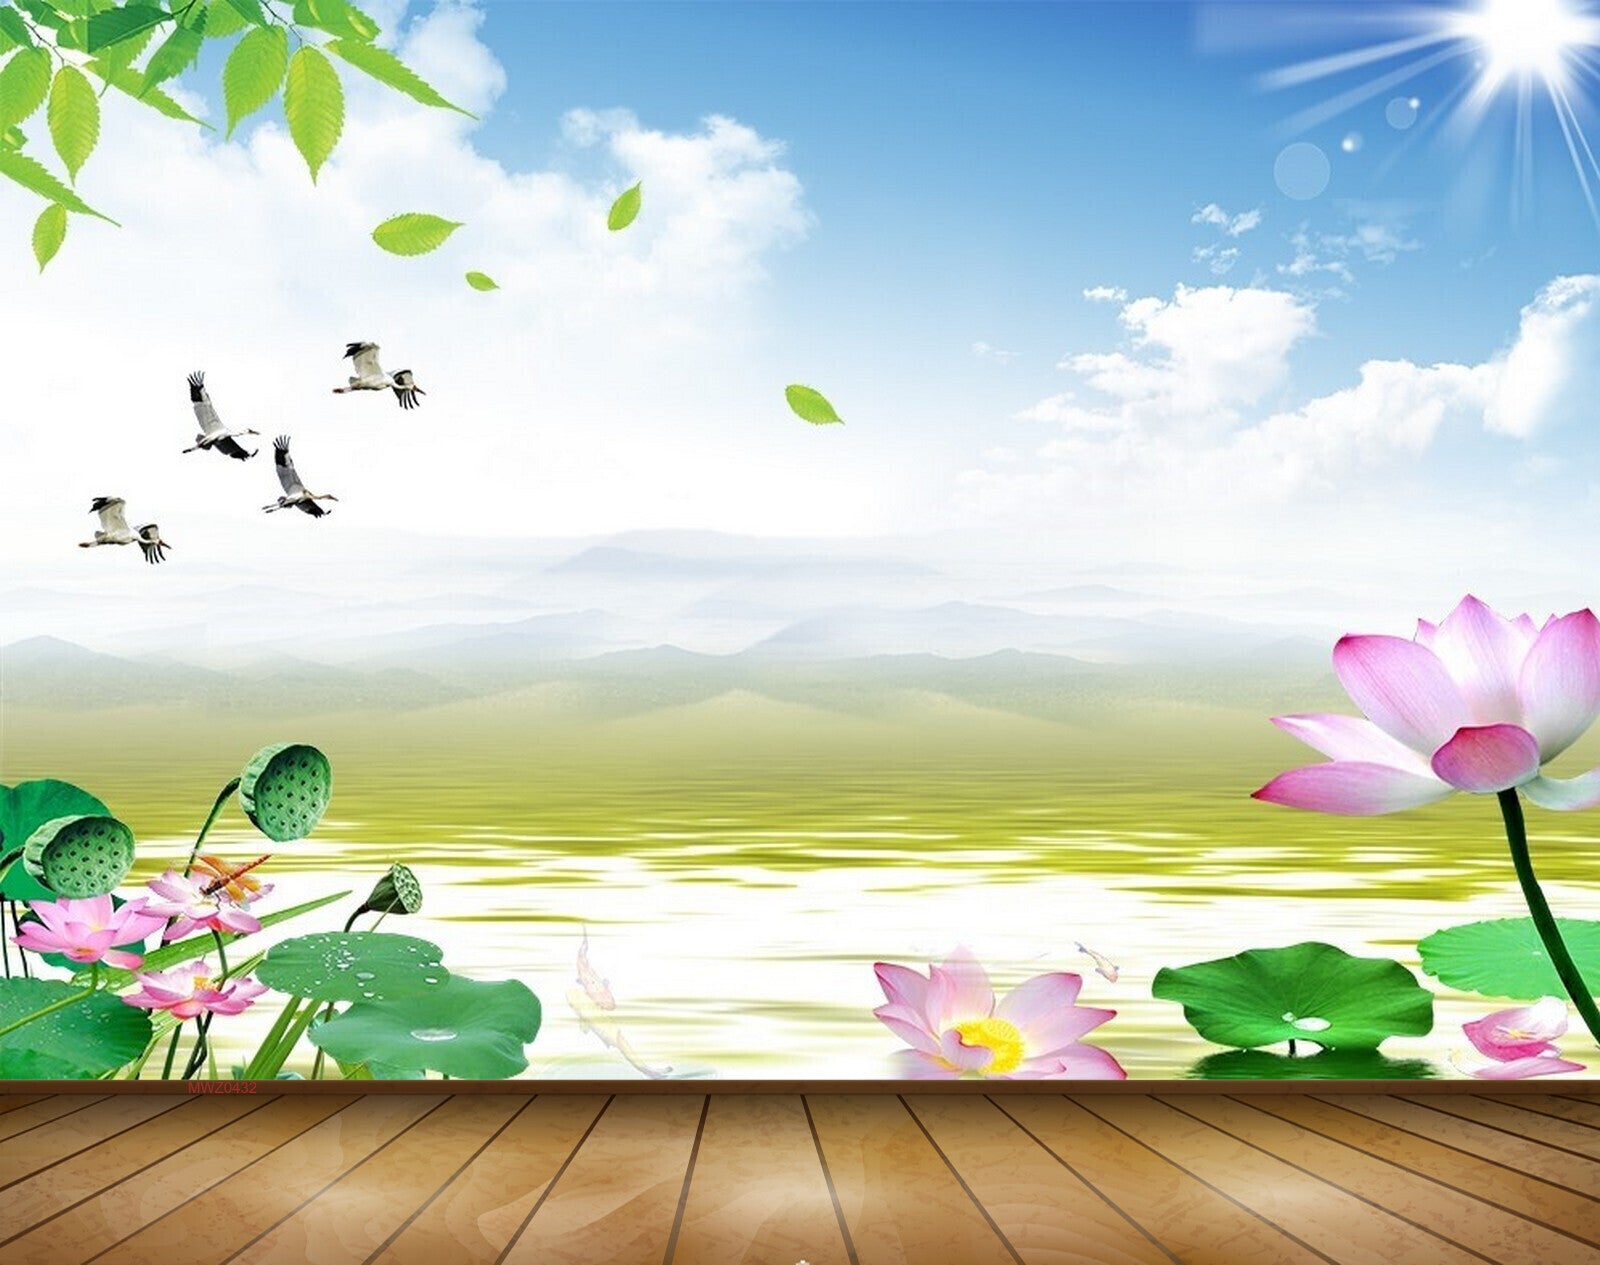 Blue Sky Green Flowers Background Illustration Wallpaper Image For Free  Download  Pngtree